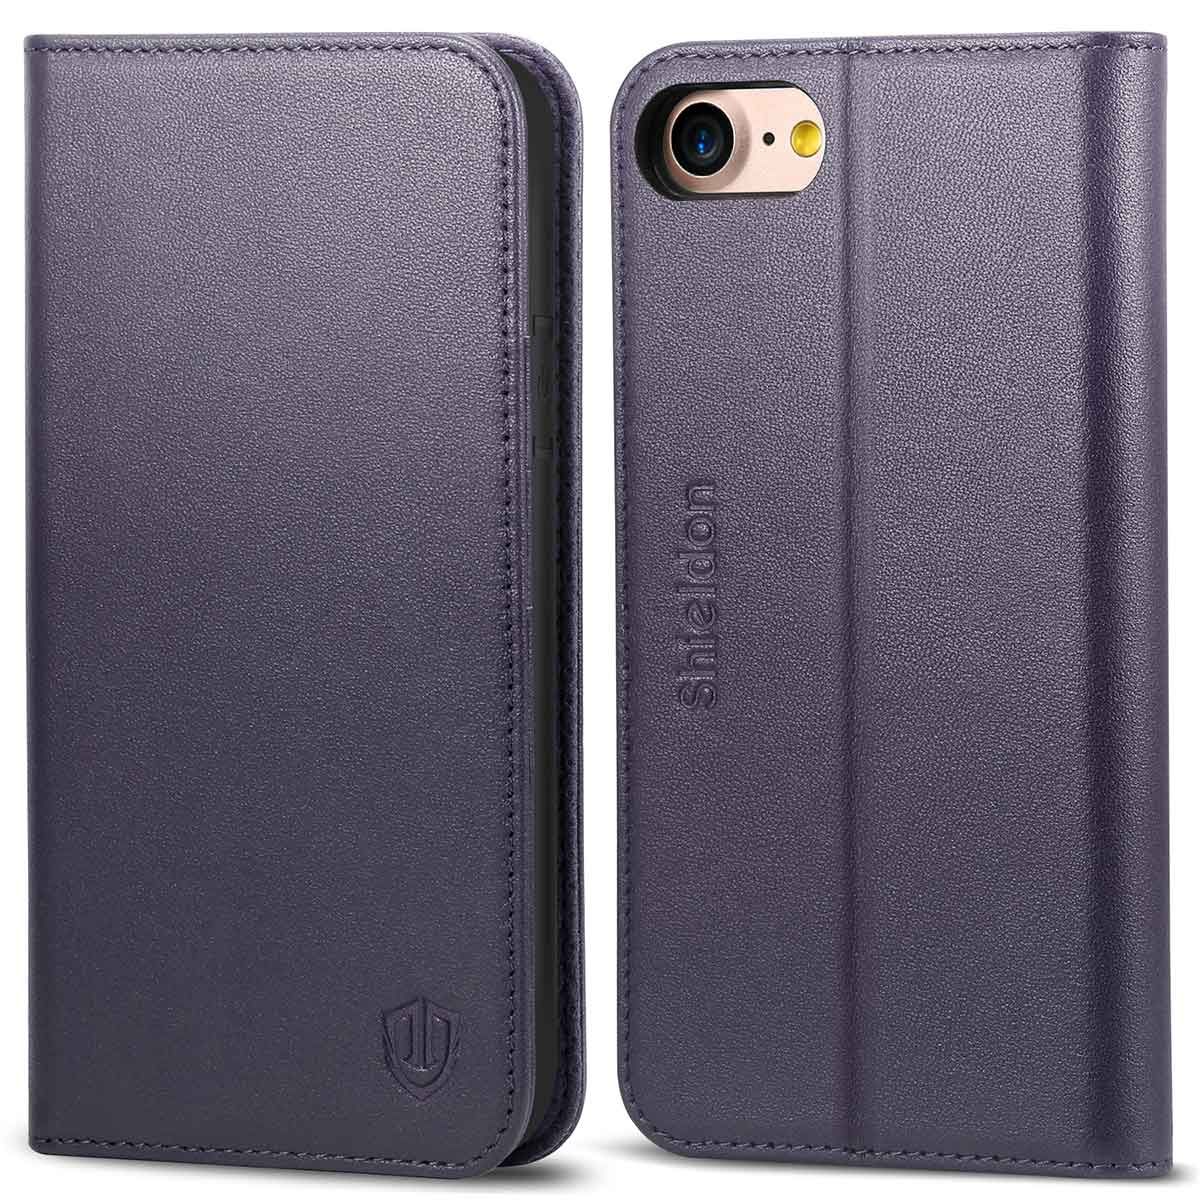 - LOBFE130020 Green Lomogo Leather Wallet Case with Kickstand Card Holder Shockproof Flip Case Cover for Apple iPhone 7 / iPhone 8 4.7-inch iPhone 7 / iPhone 8 Case 